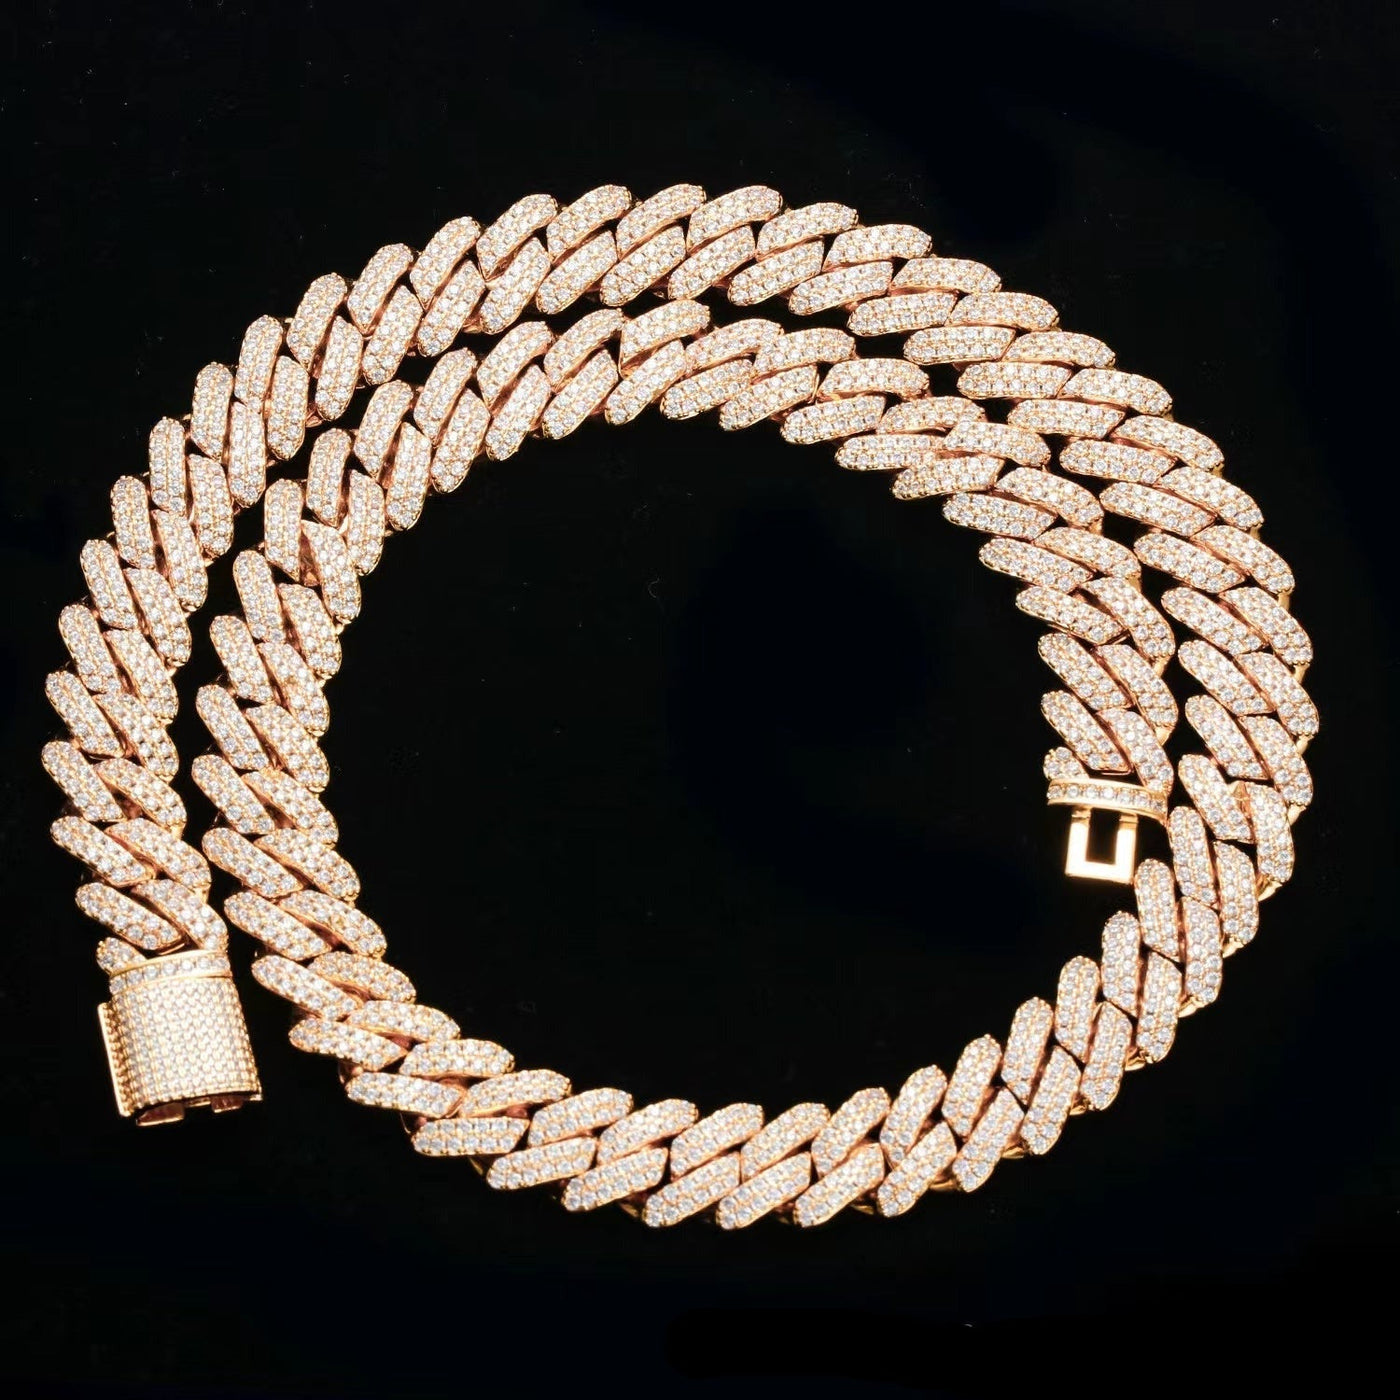 The Stunning Moment II® - 12mm Iced Diamond Prong Link Cuban Choker Chain in 14K Gold 